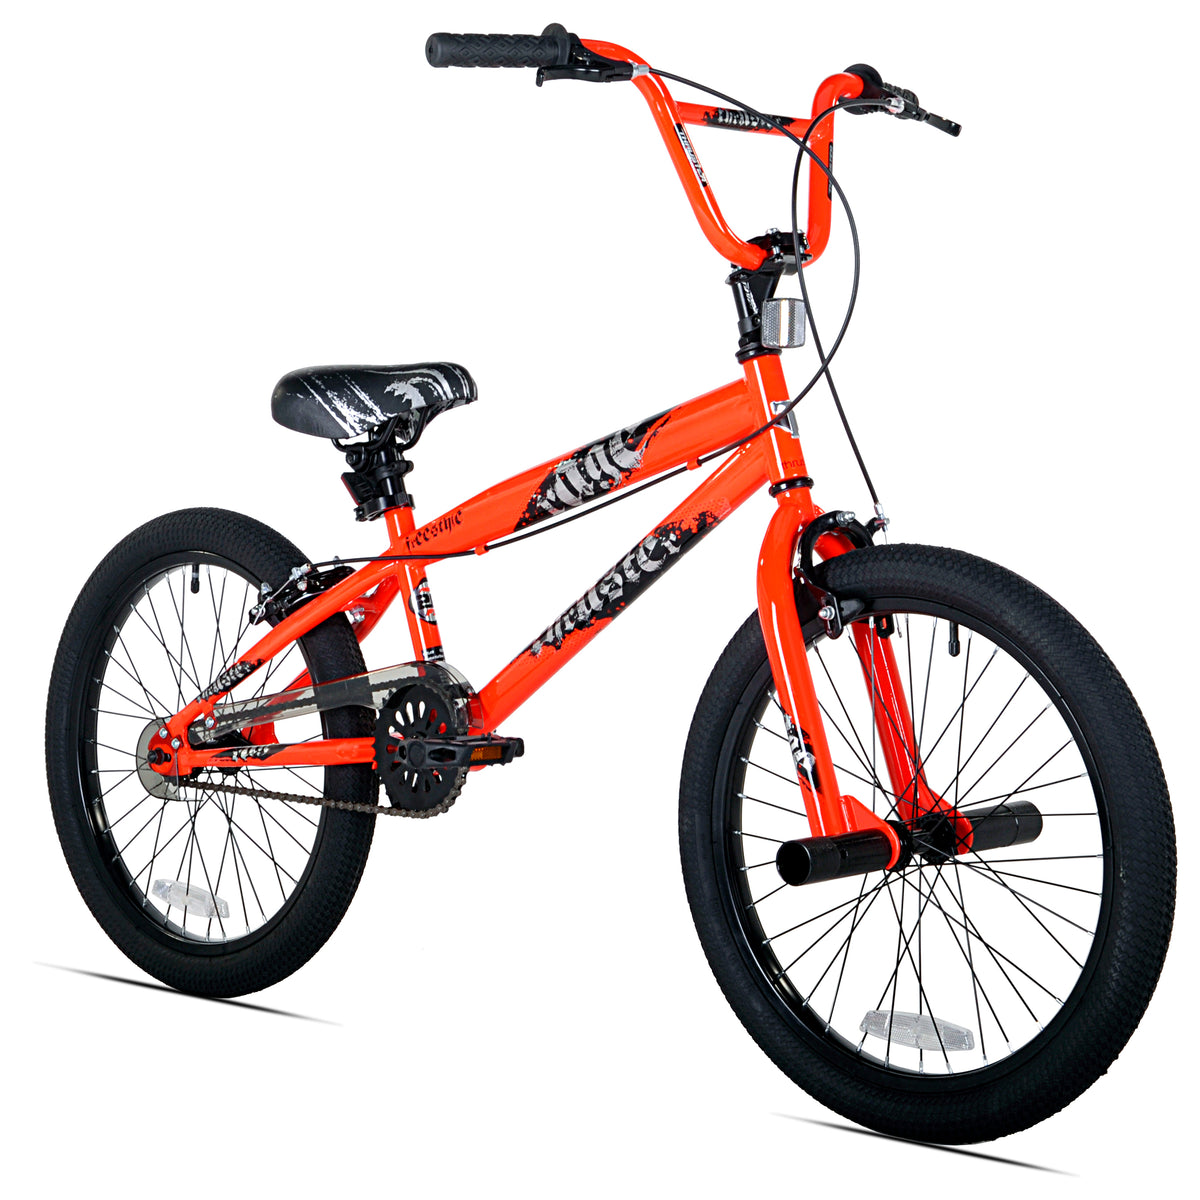 20" Kent Rage | BMX Bike for Kids Ages 7-13